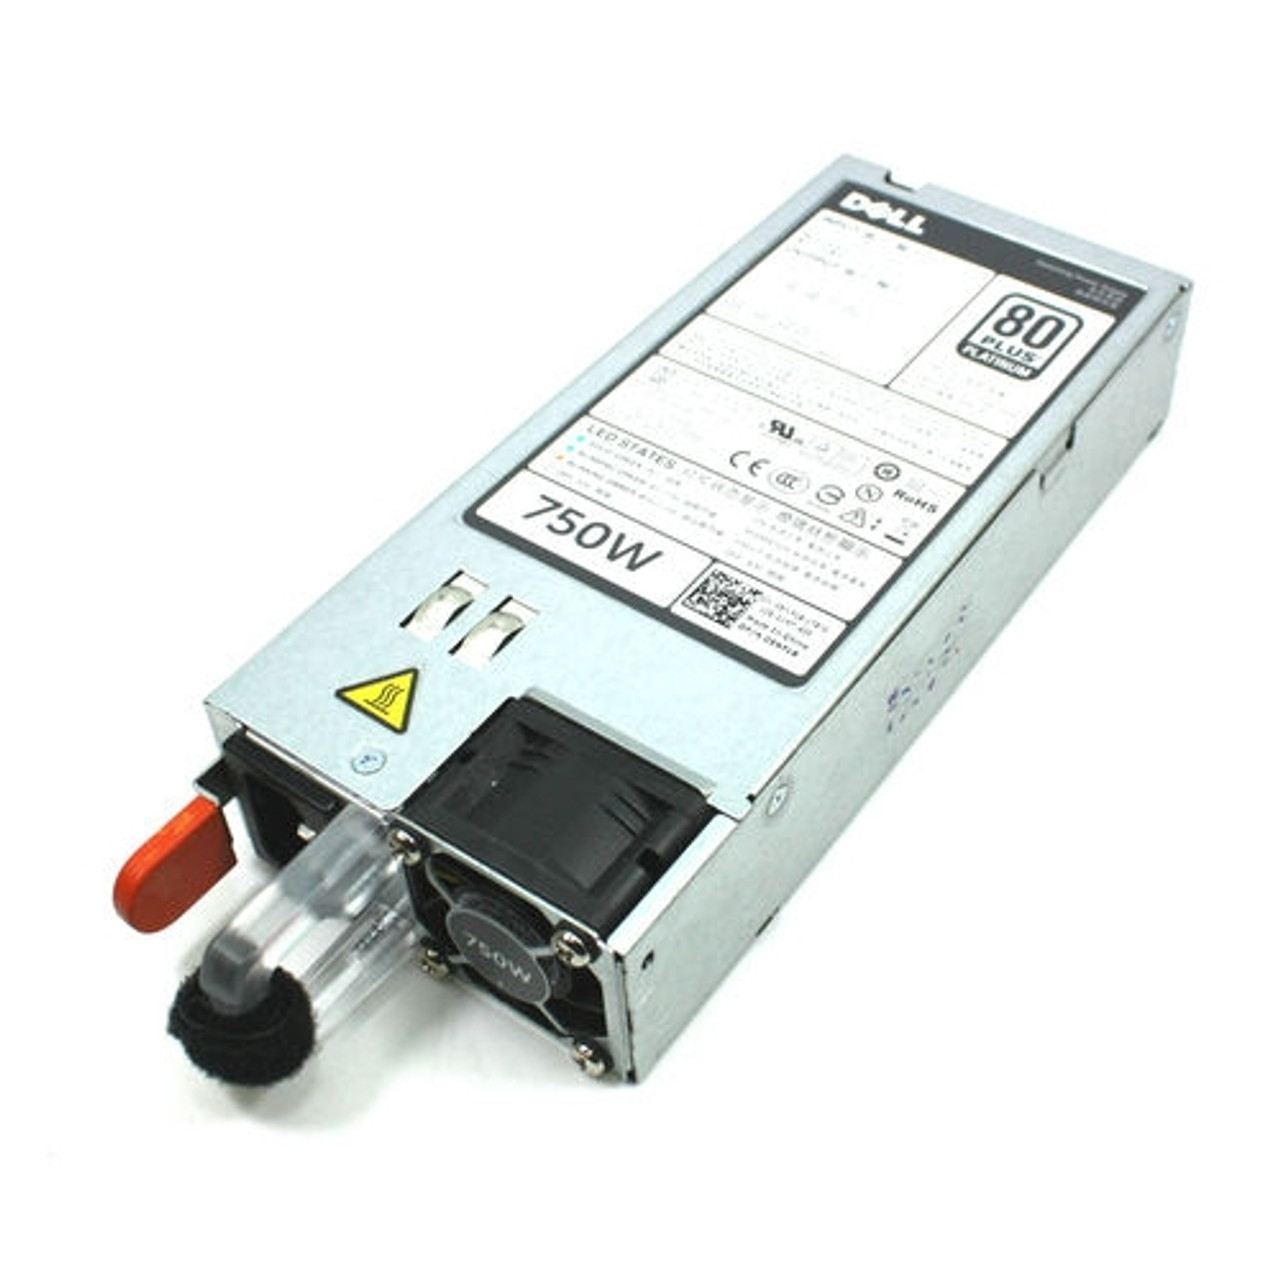 DELL 05NF18 750 Watt Redundant Power Supply For Poweredge R820 R720 R720 Xd